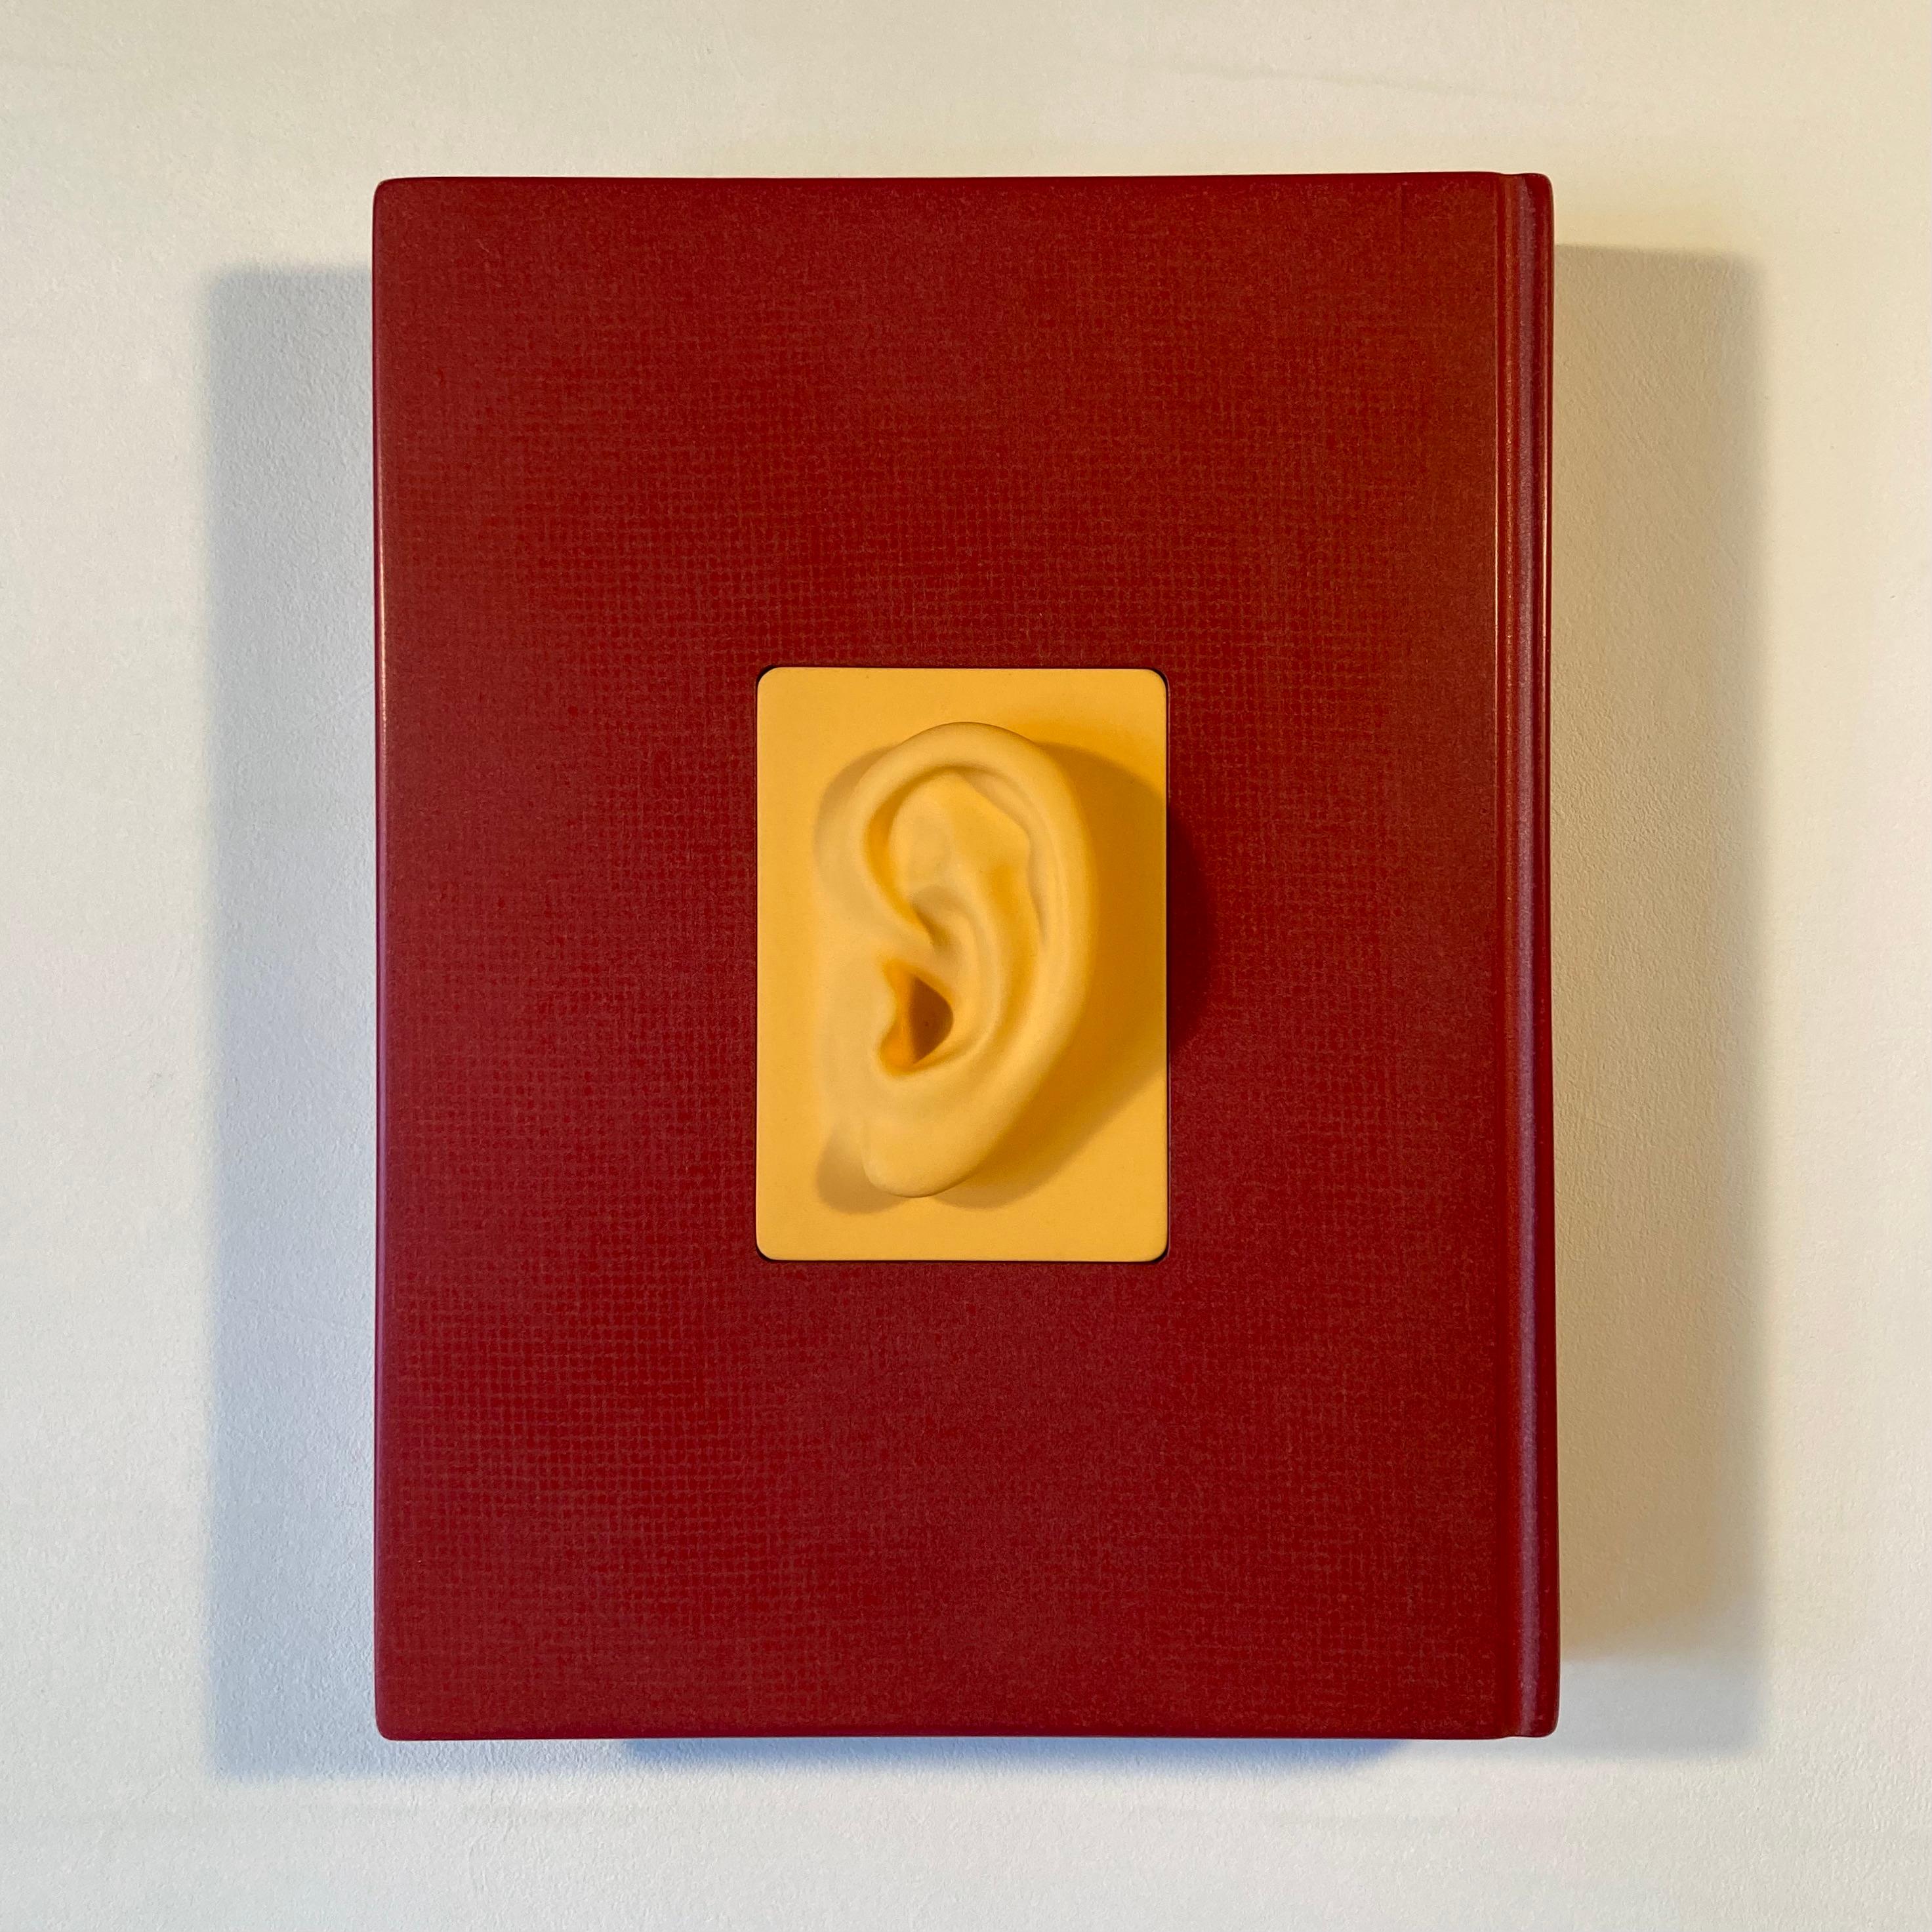 Sean O'Meallie Still-Life Sculpture - Ear